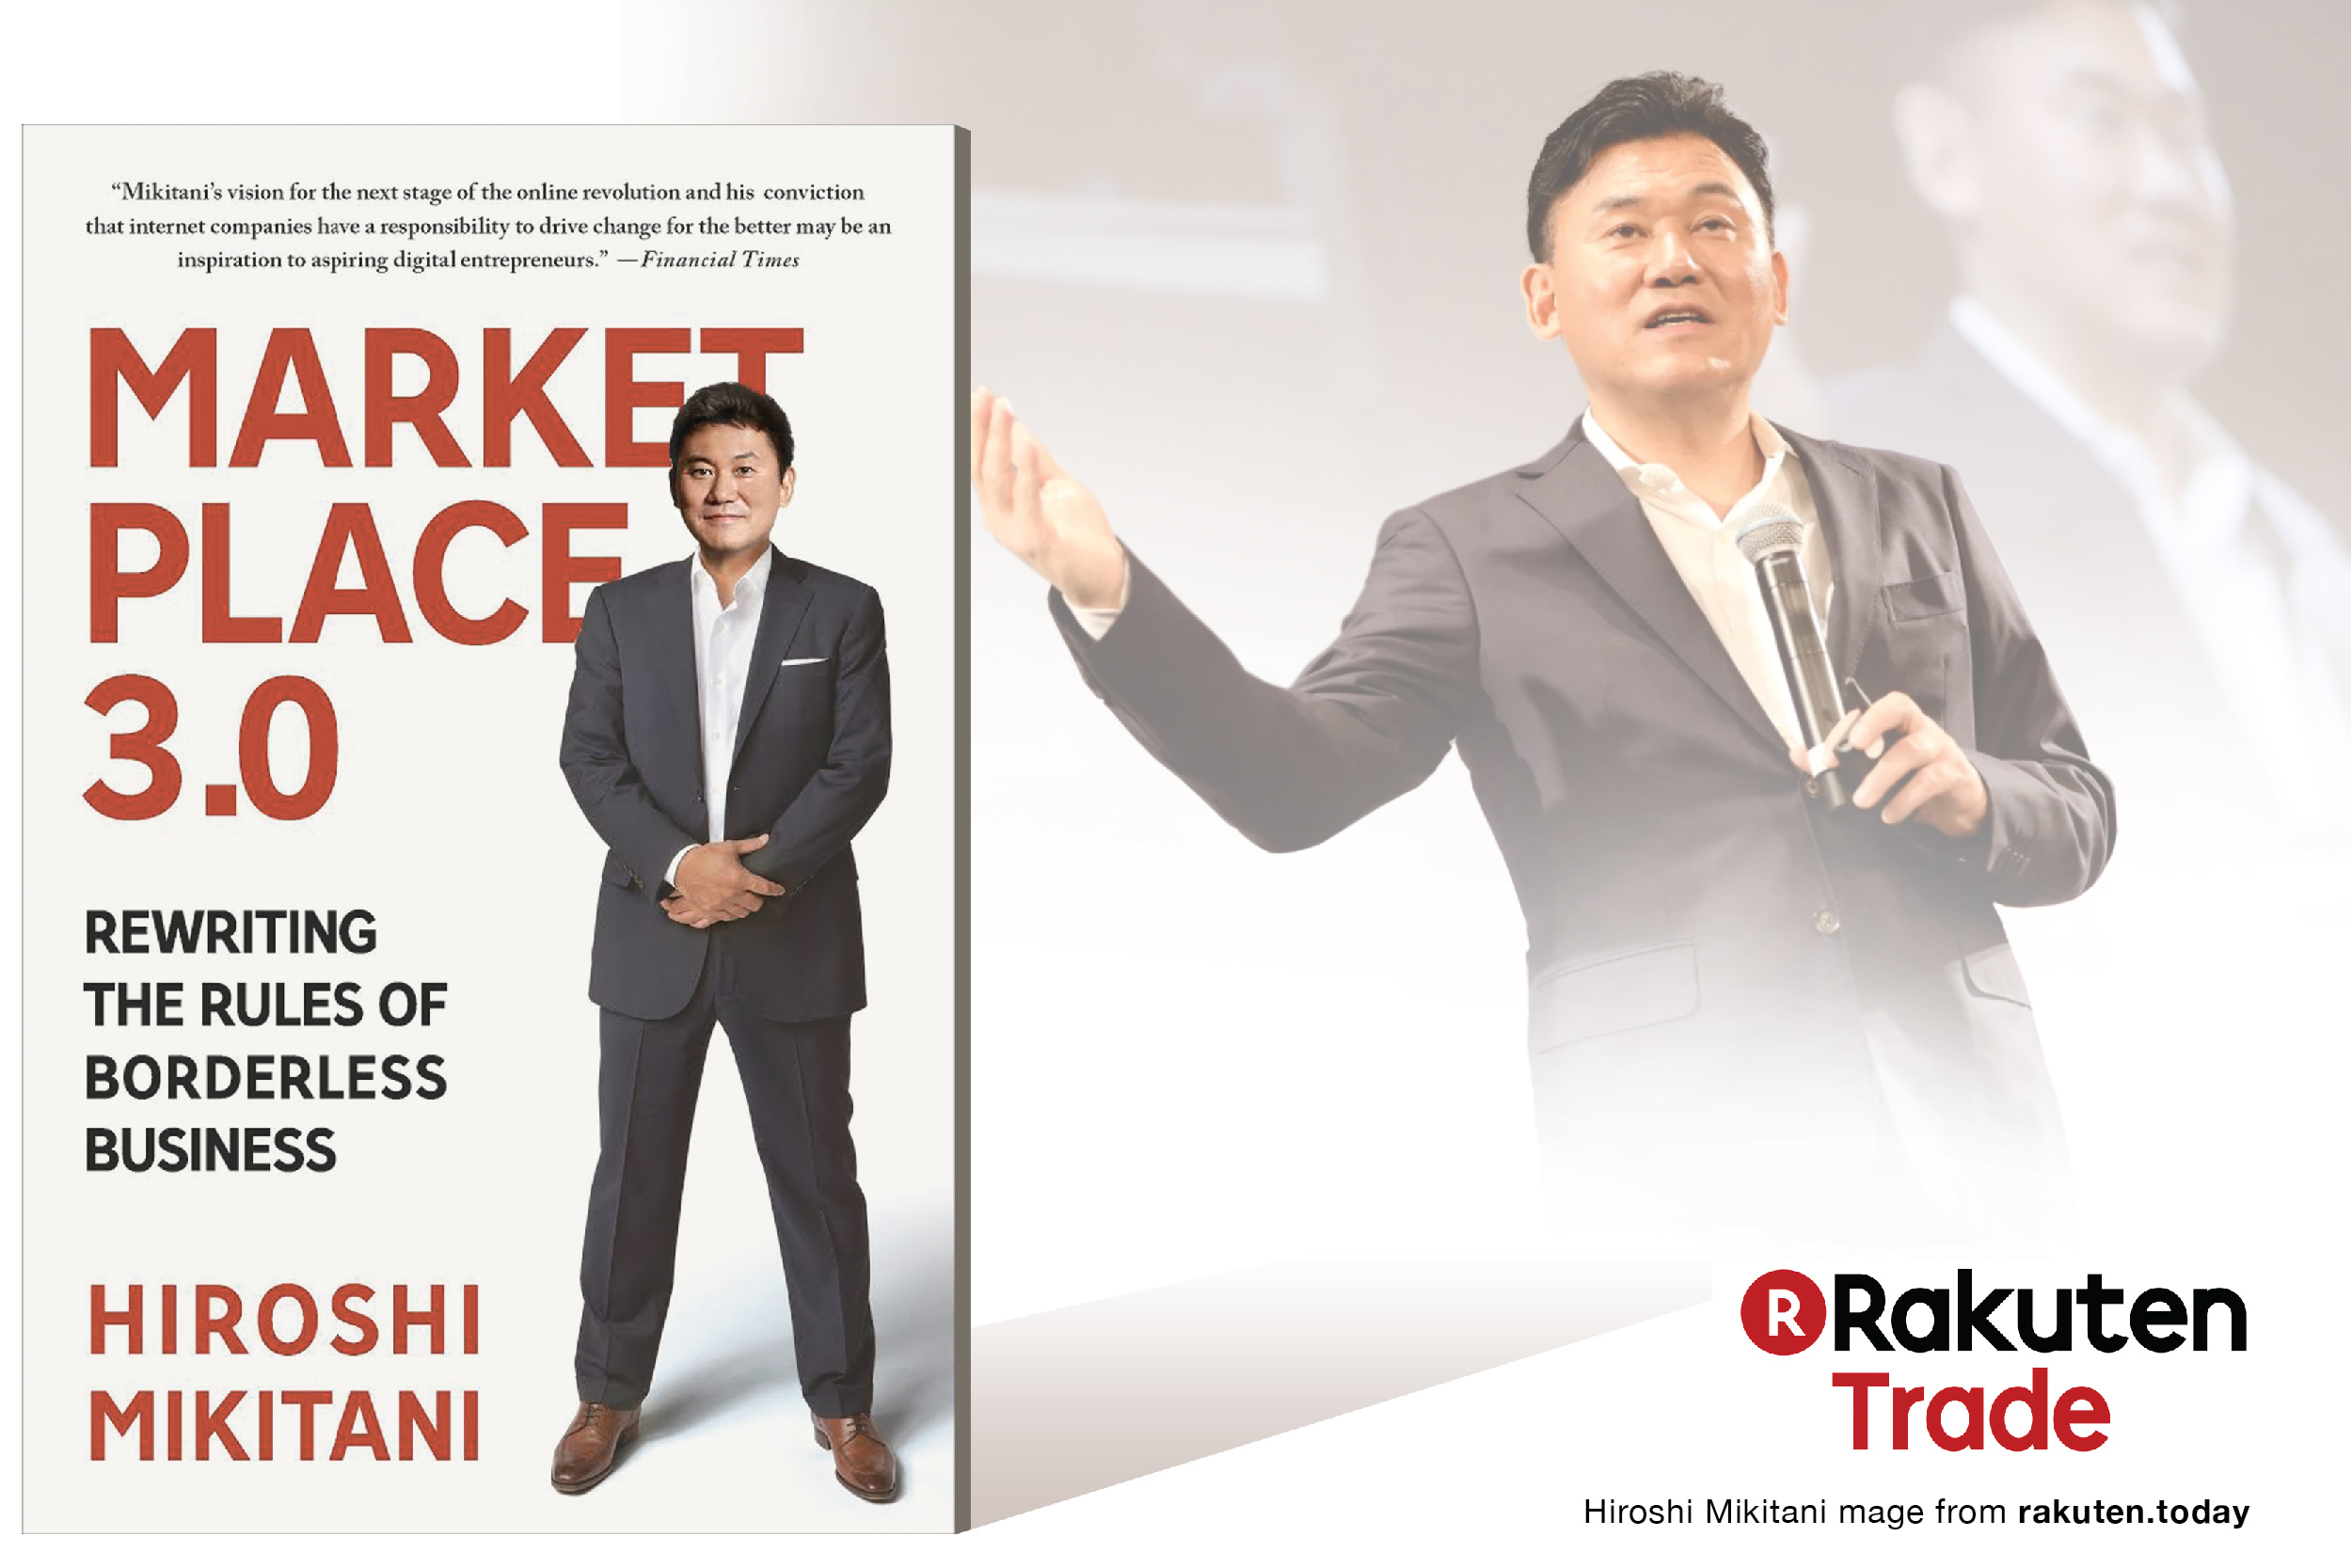 Rakuten Trade - Malaysia’s First fully Online Broker